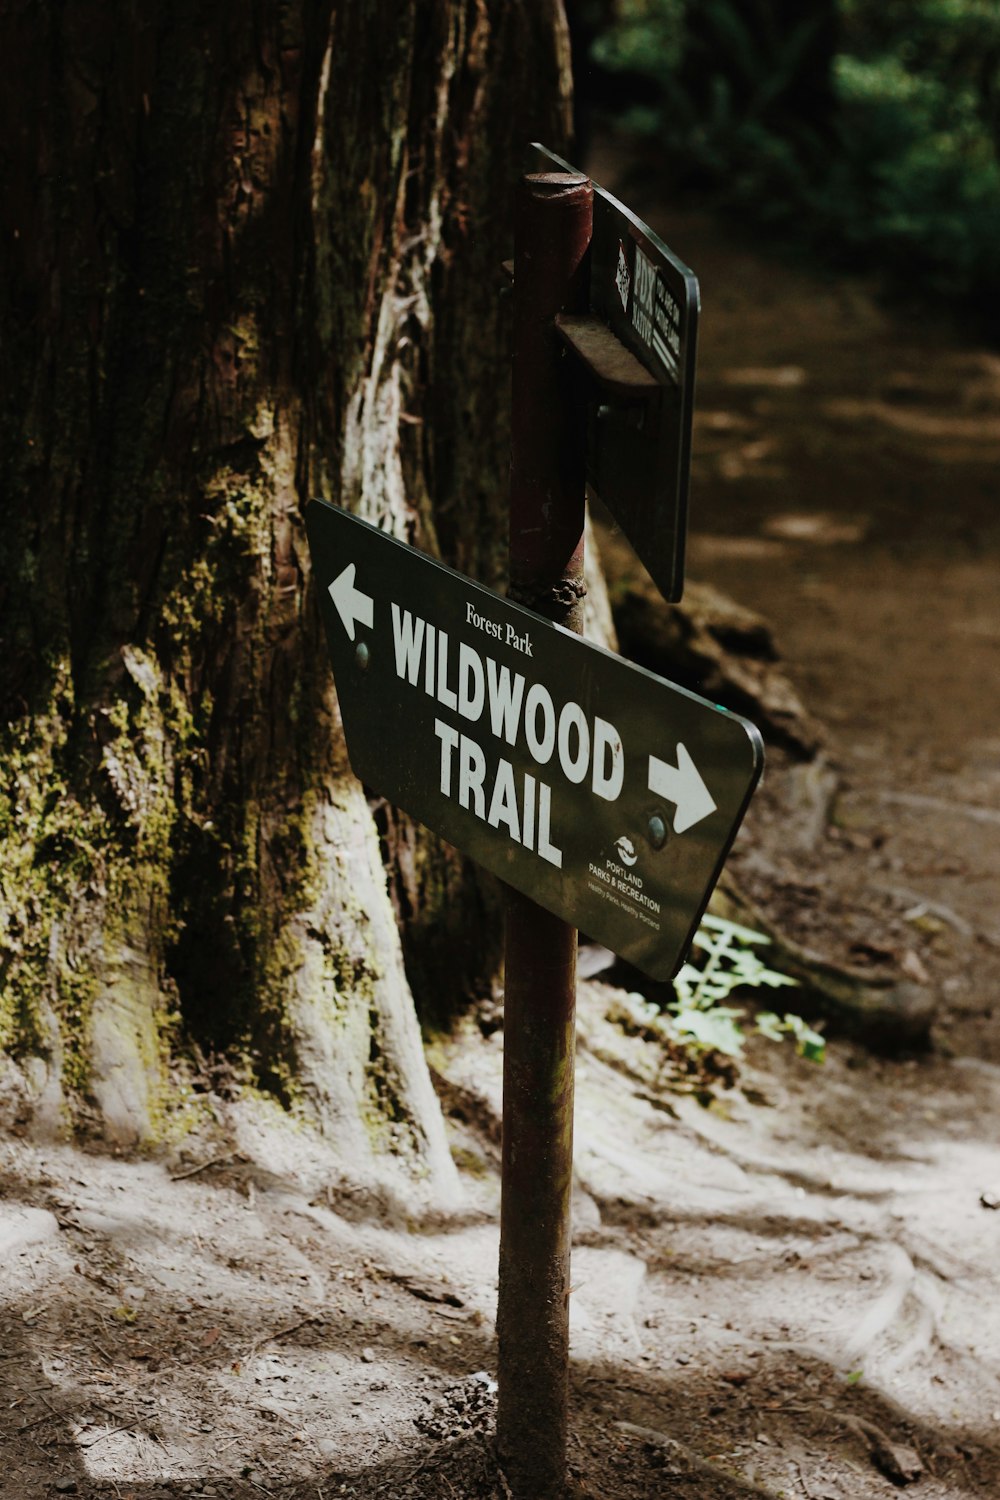 Wildwood Trail sign near tree